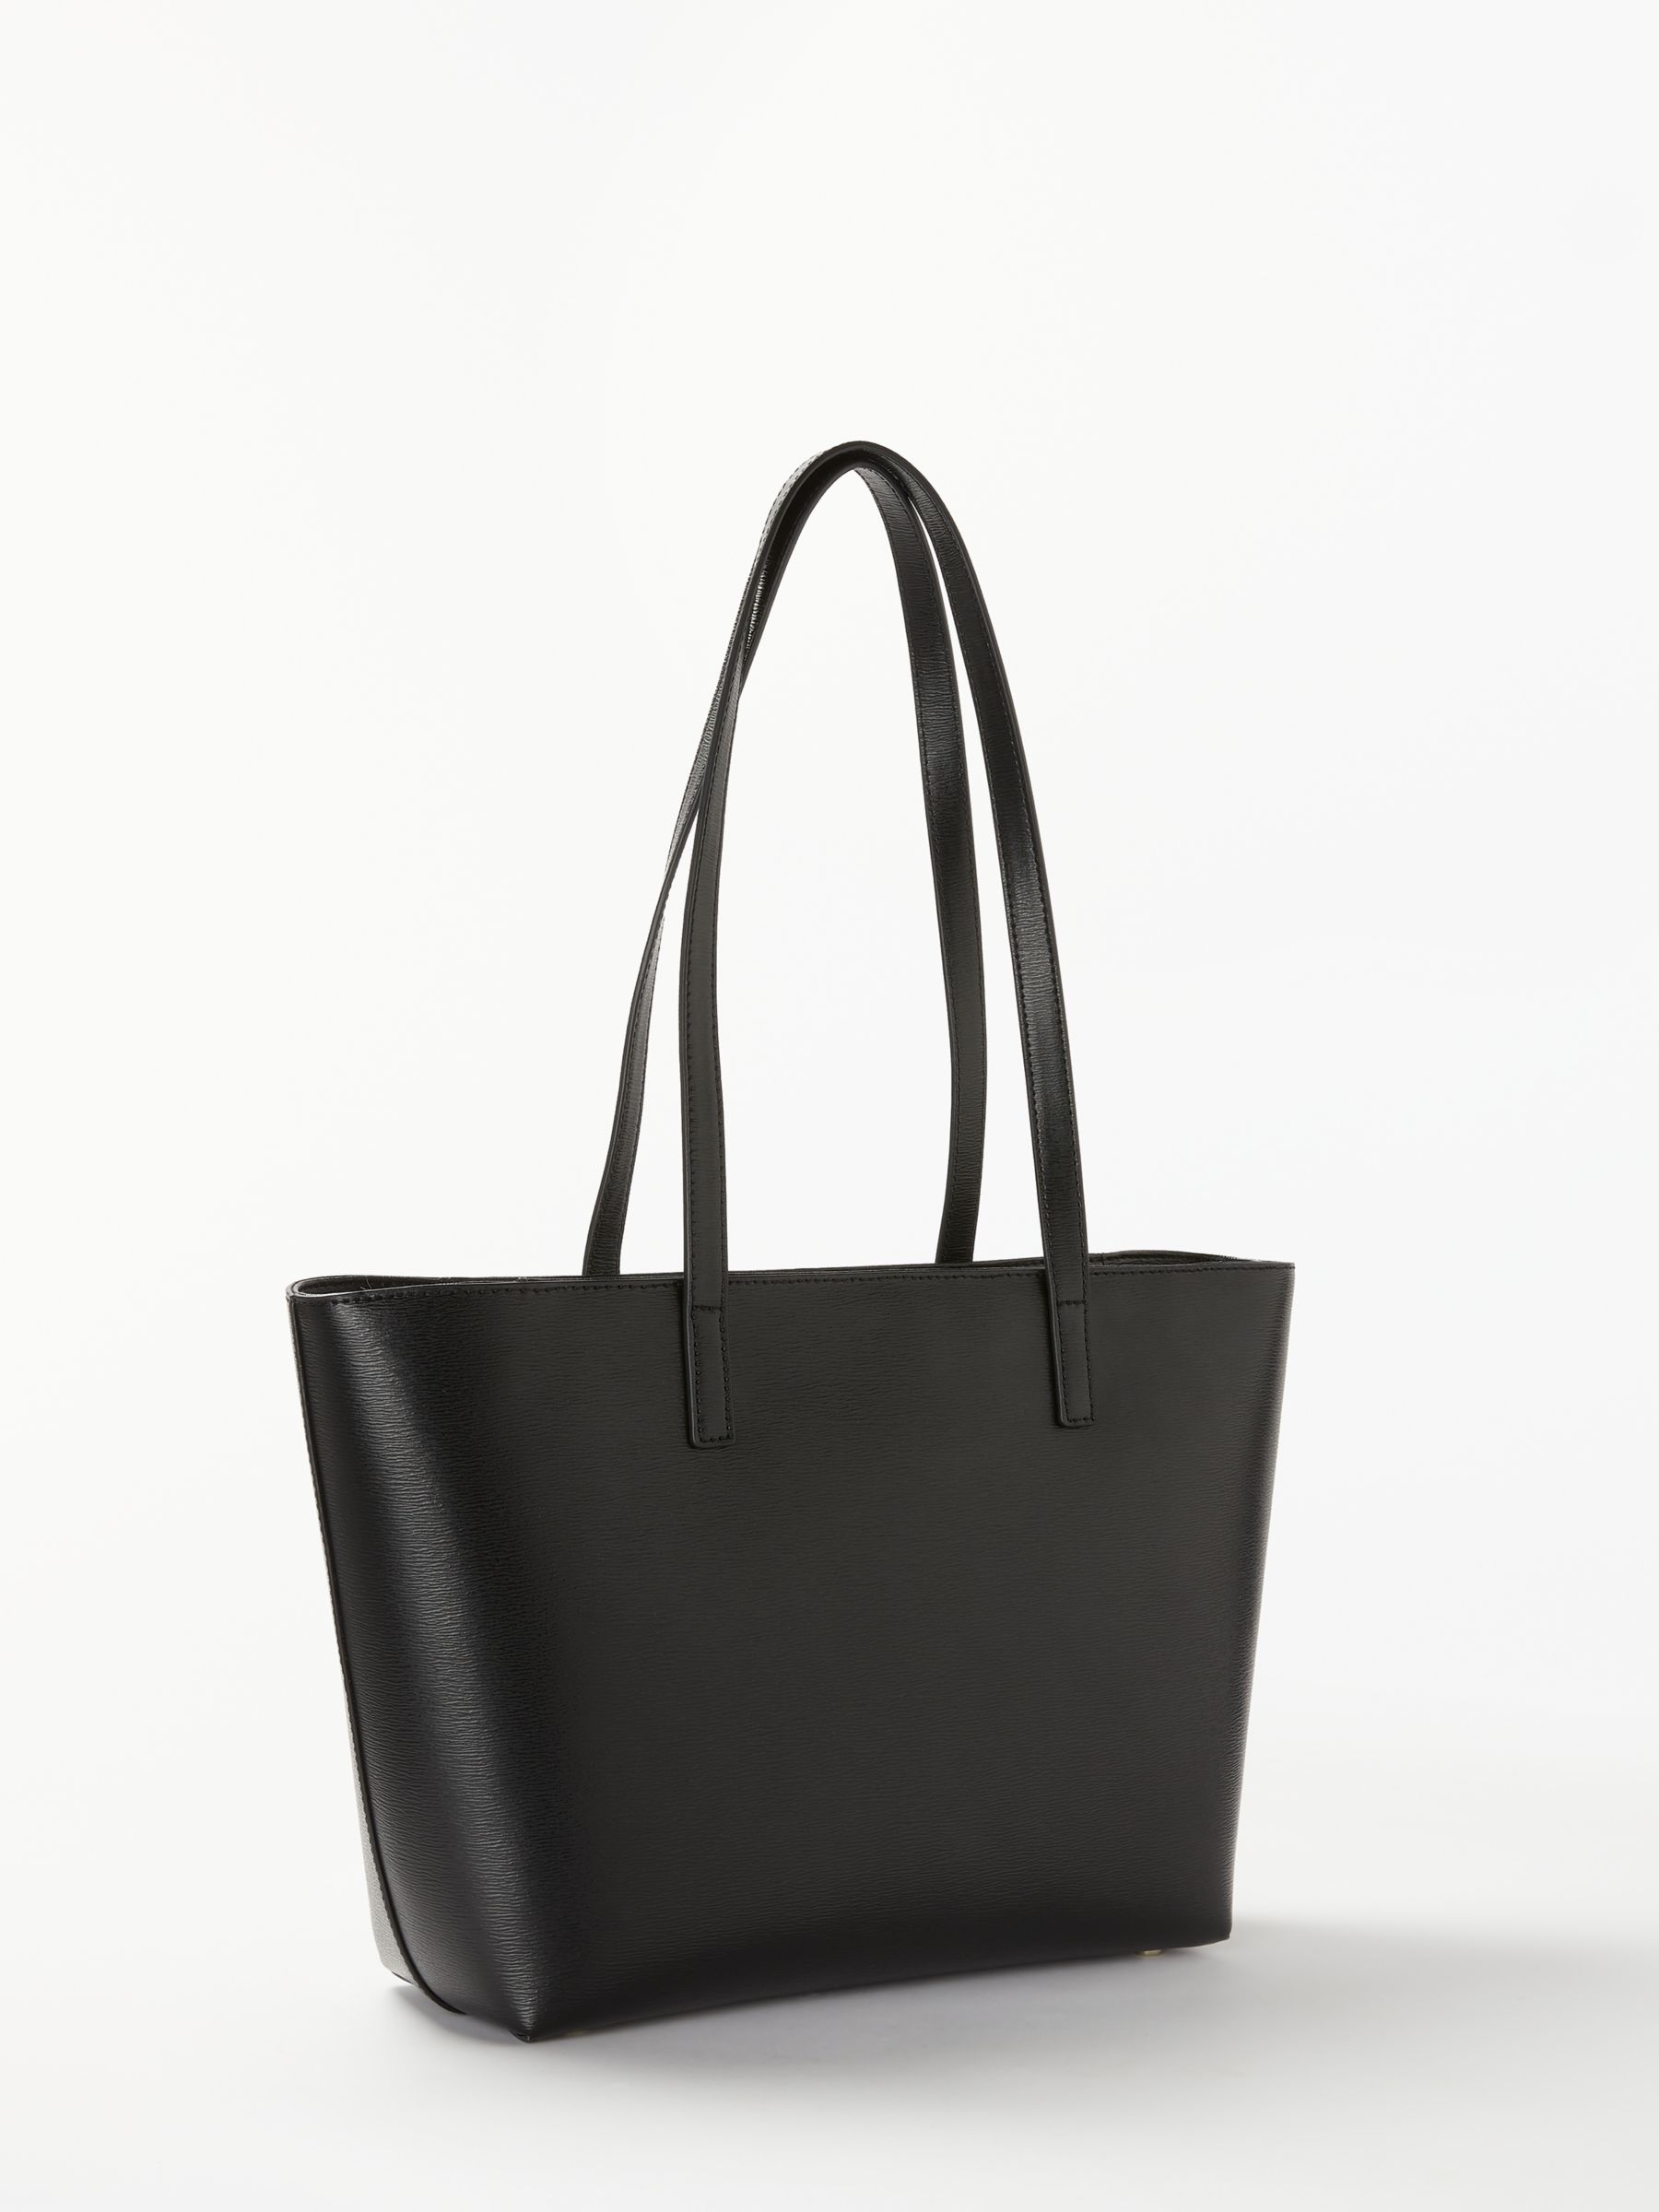 DKNY Bryant Medium Leather Tote Bag, Black